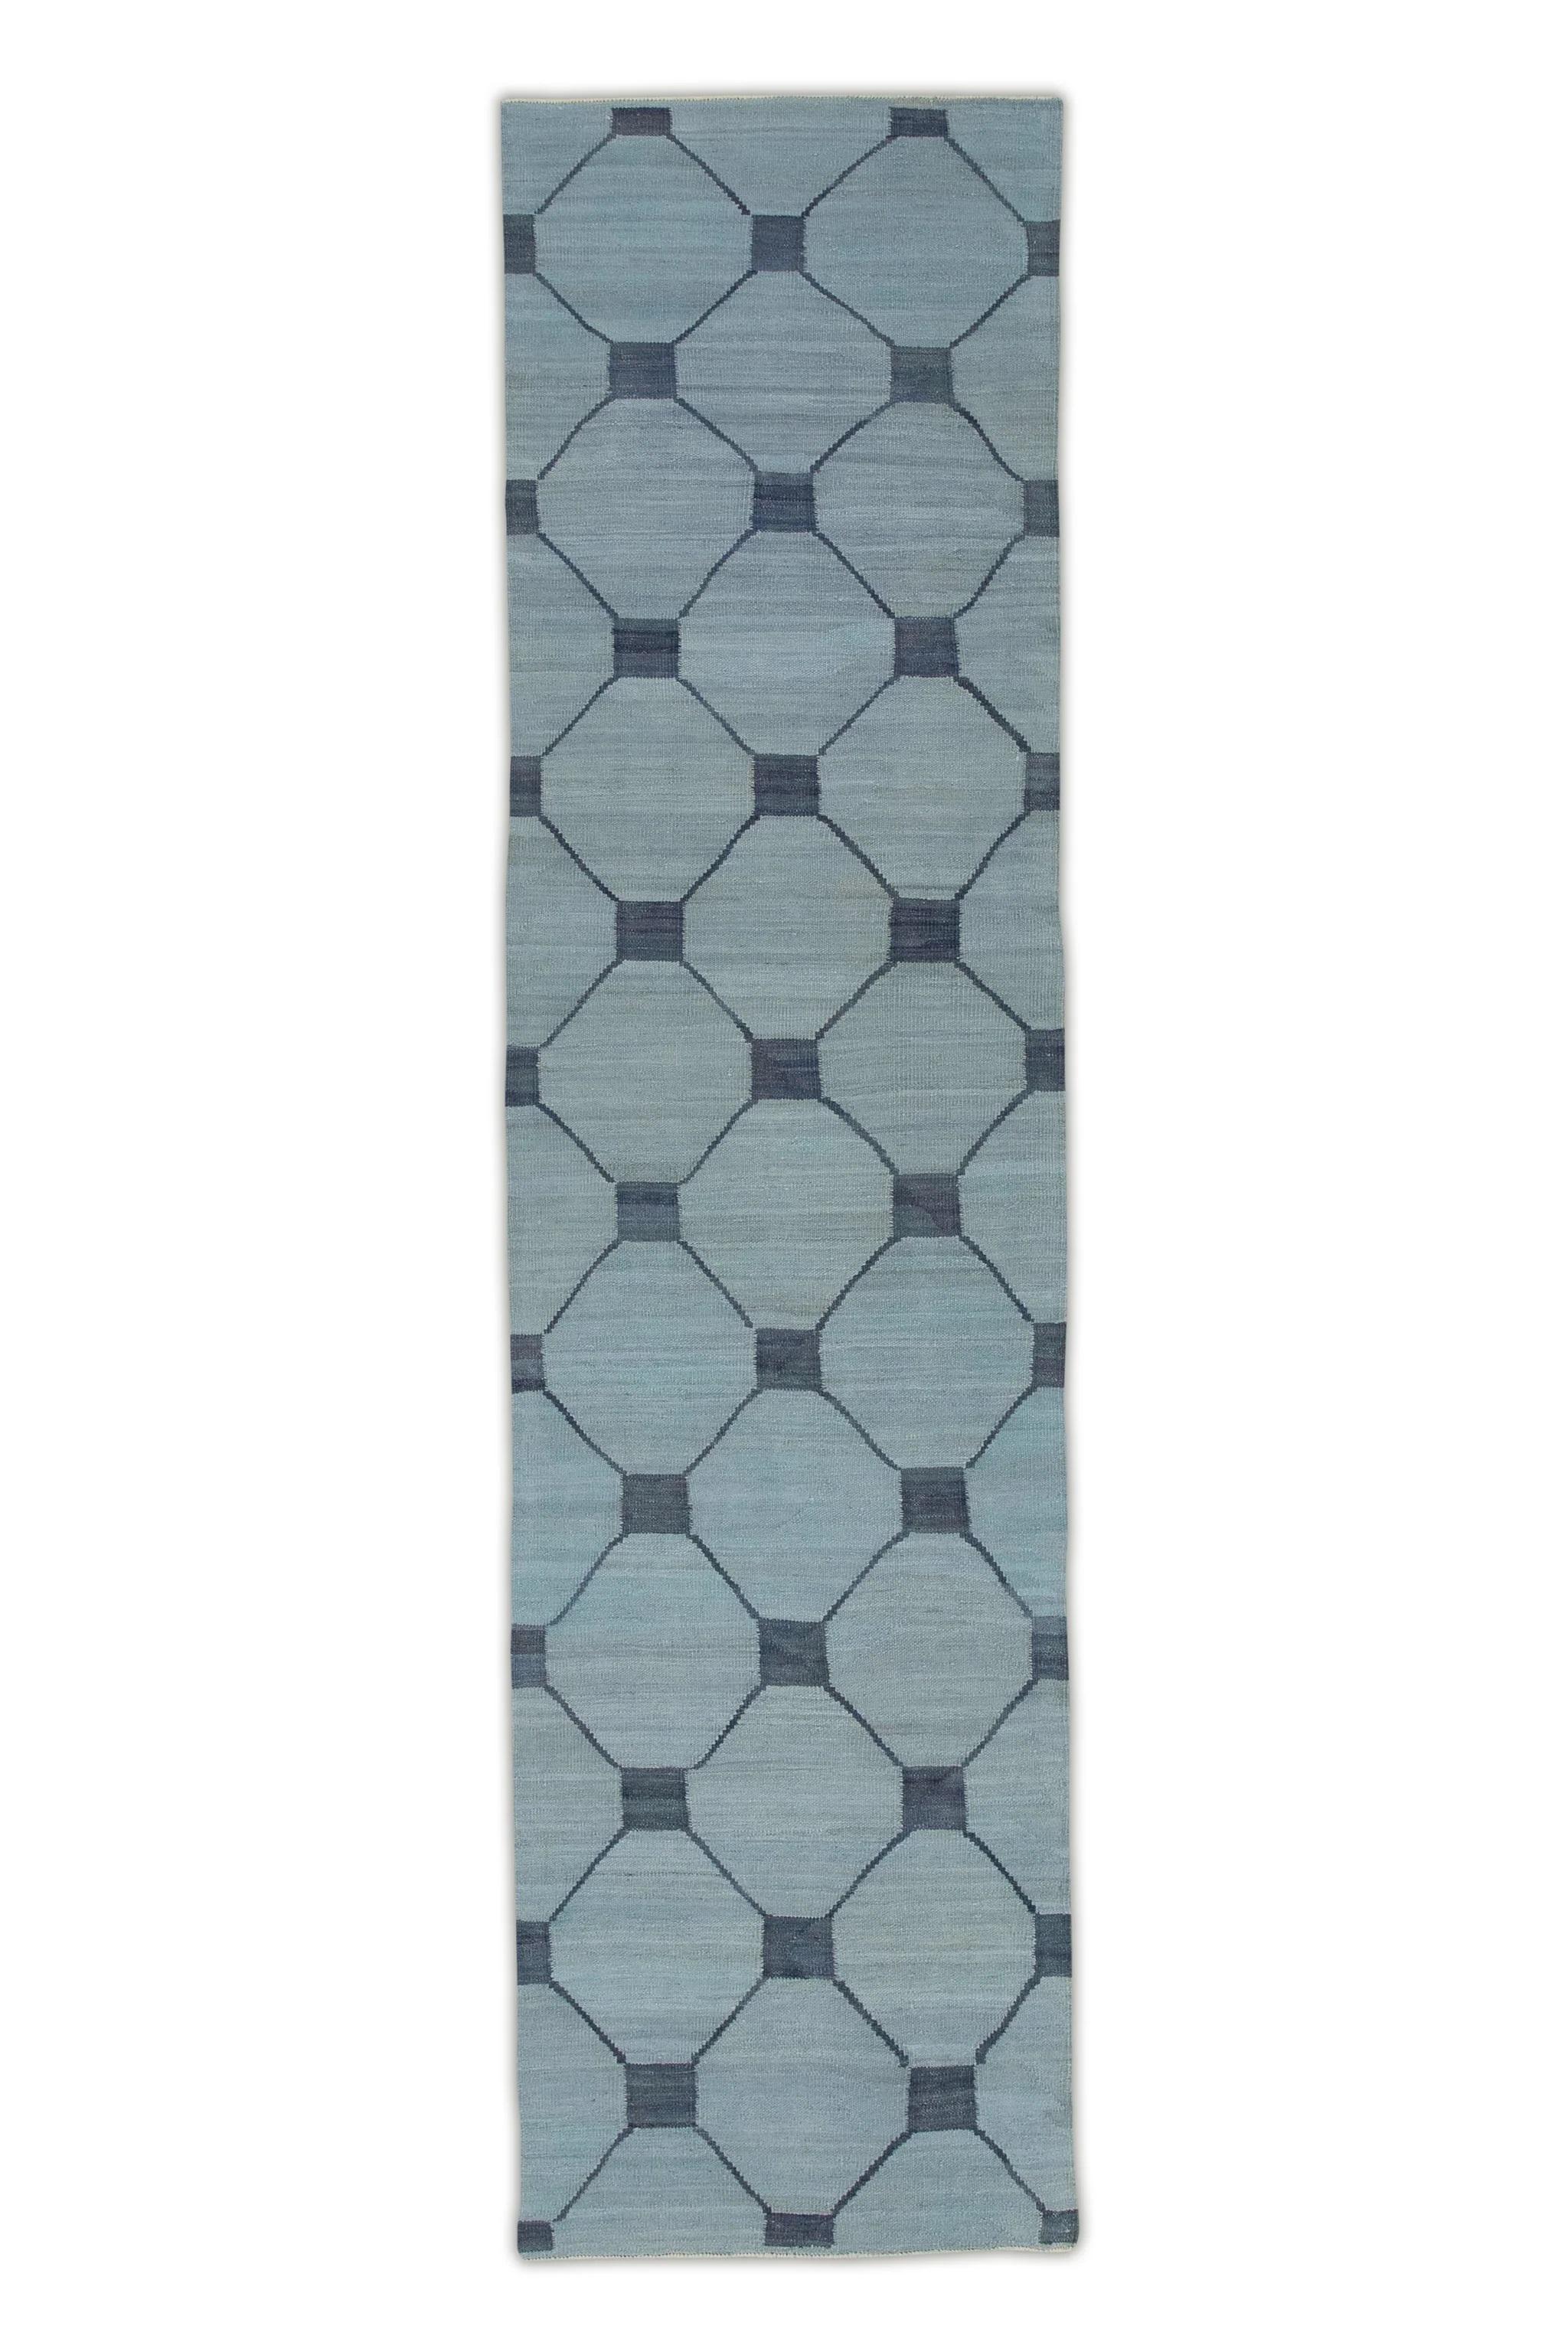 Blue Modern Flatweave Handmade Wool Runner in Navy Geometric Design 2'9